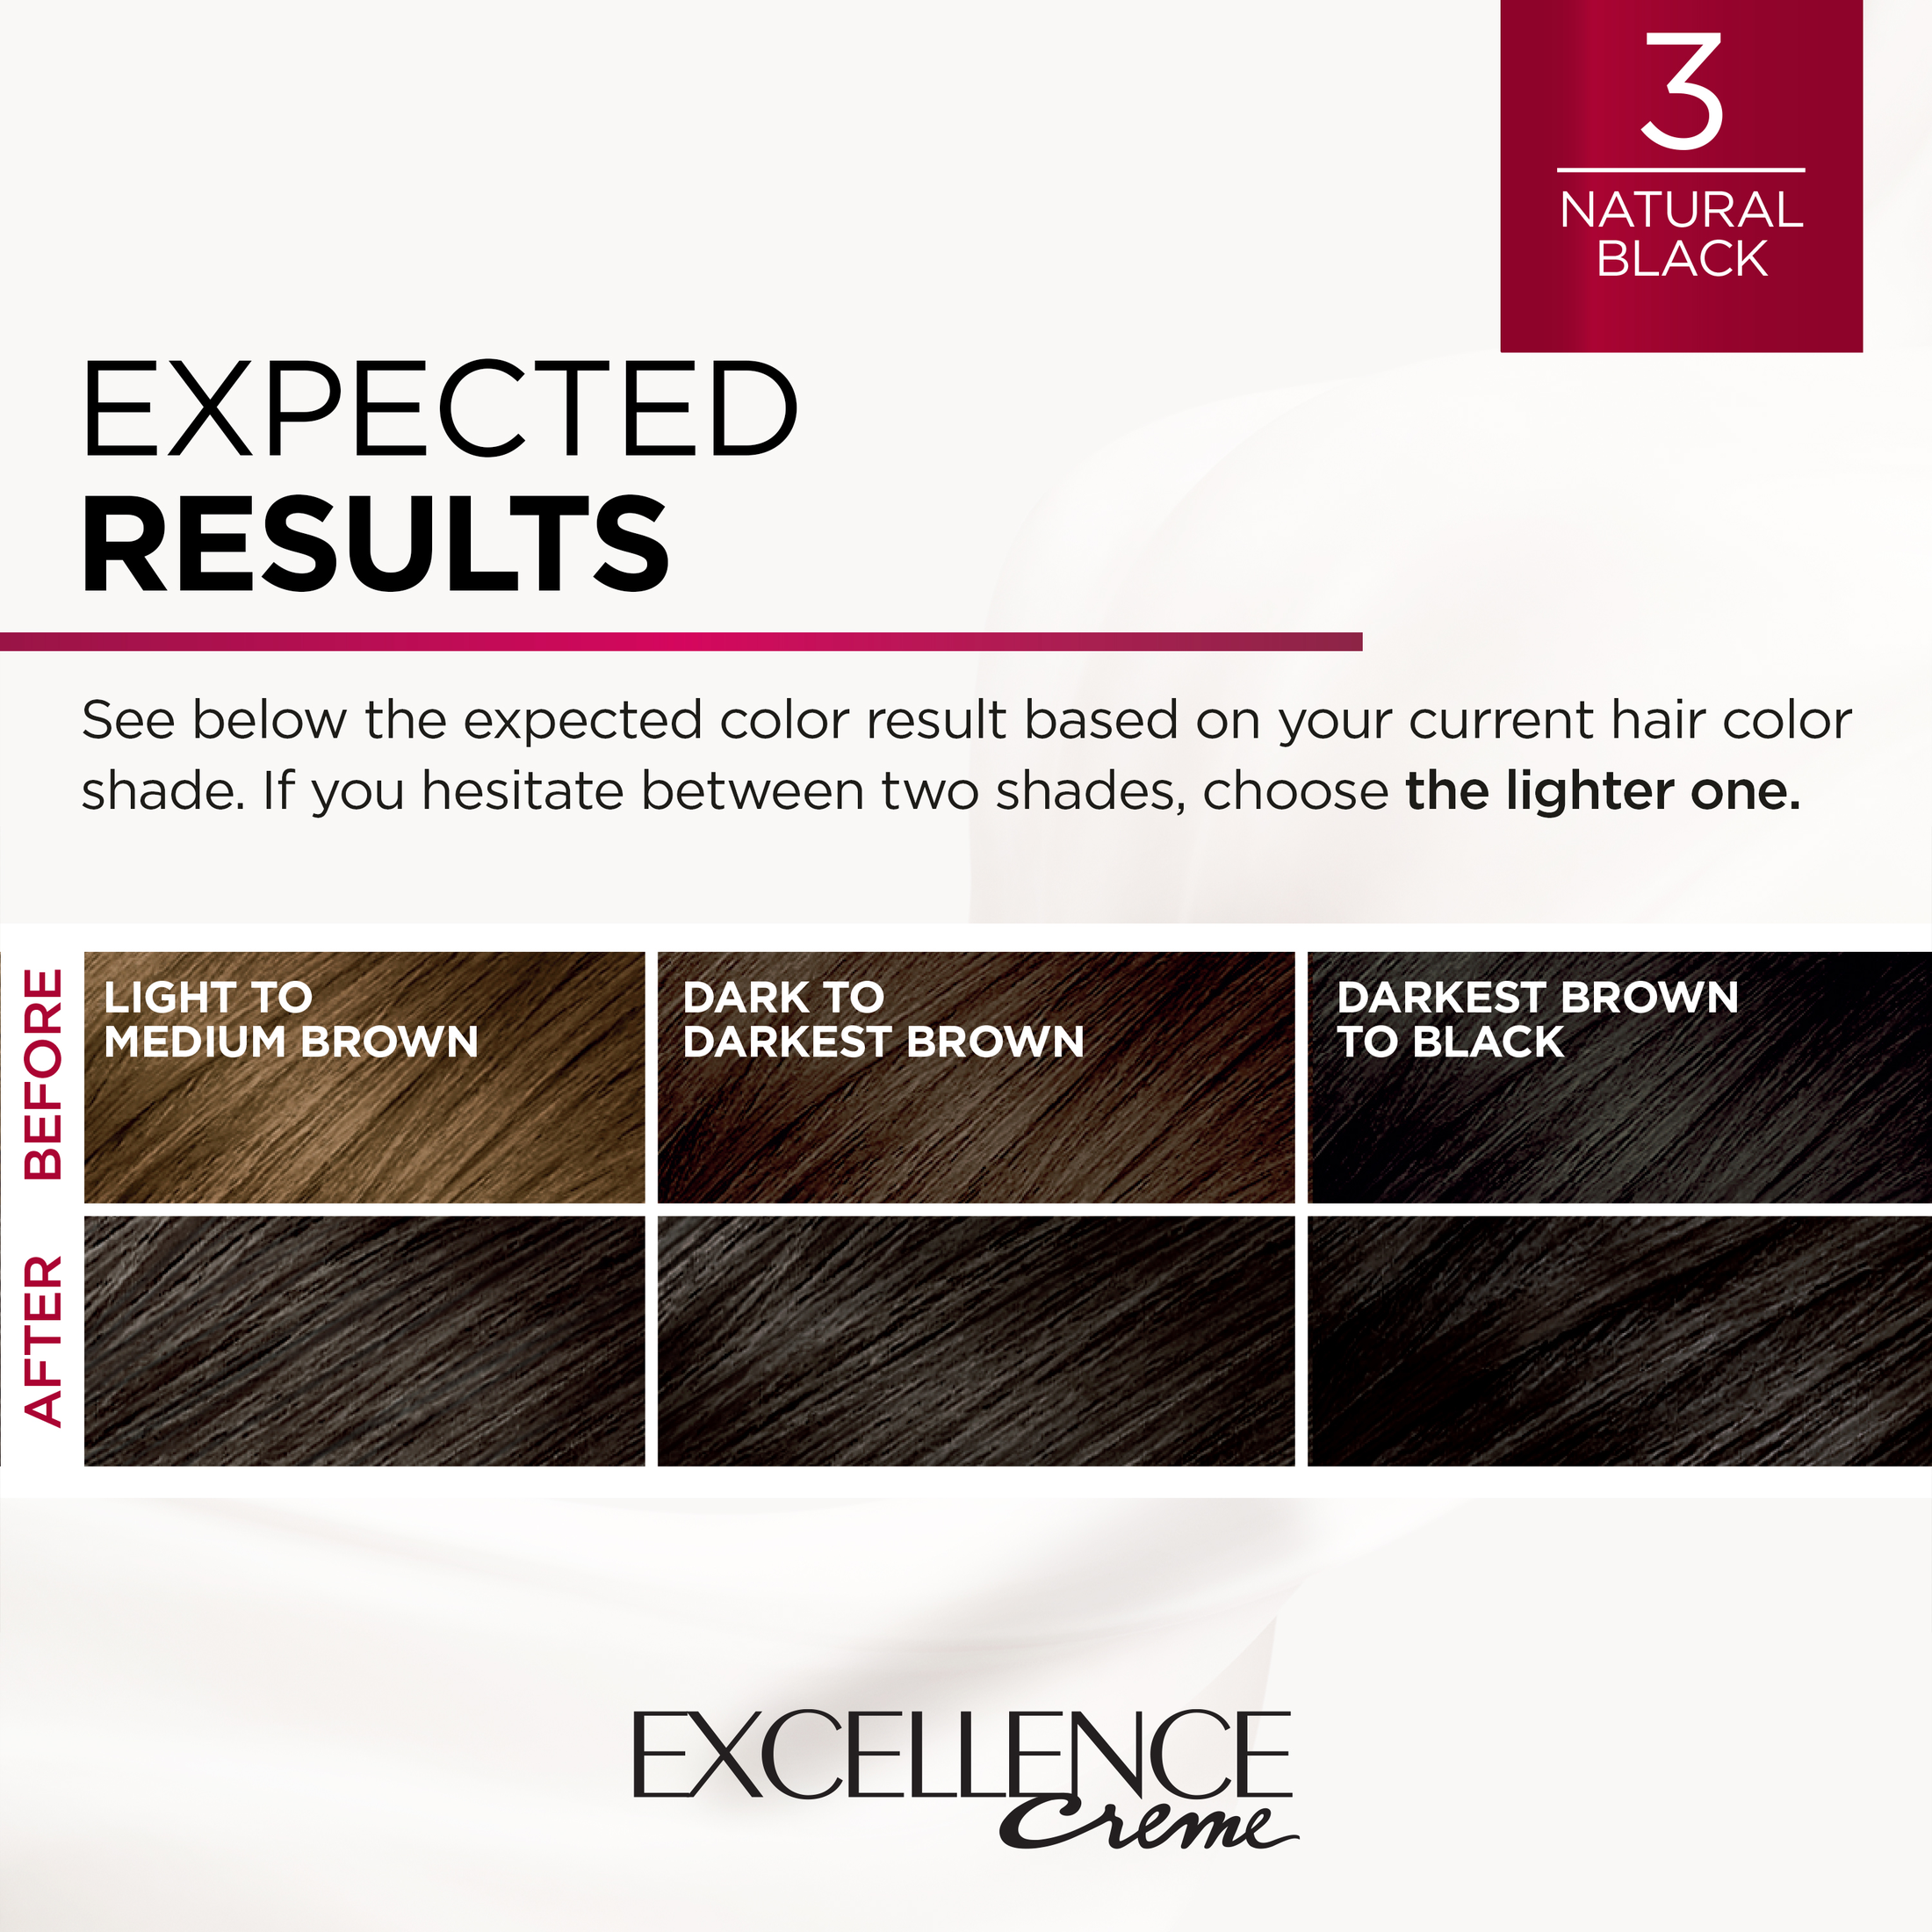 L'Oreal Paris Excellence Creme Permanent Hair Color, 3 Natural Black - image 5 of 7